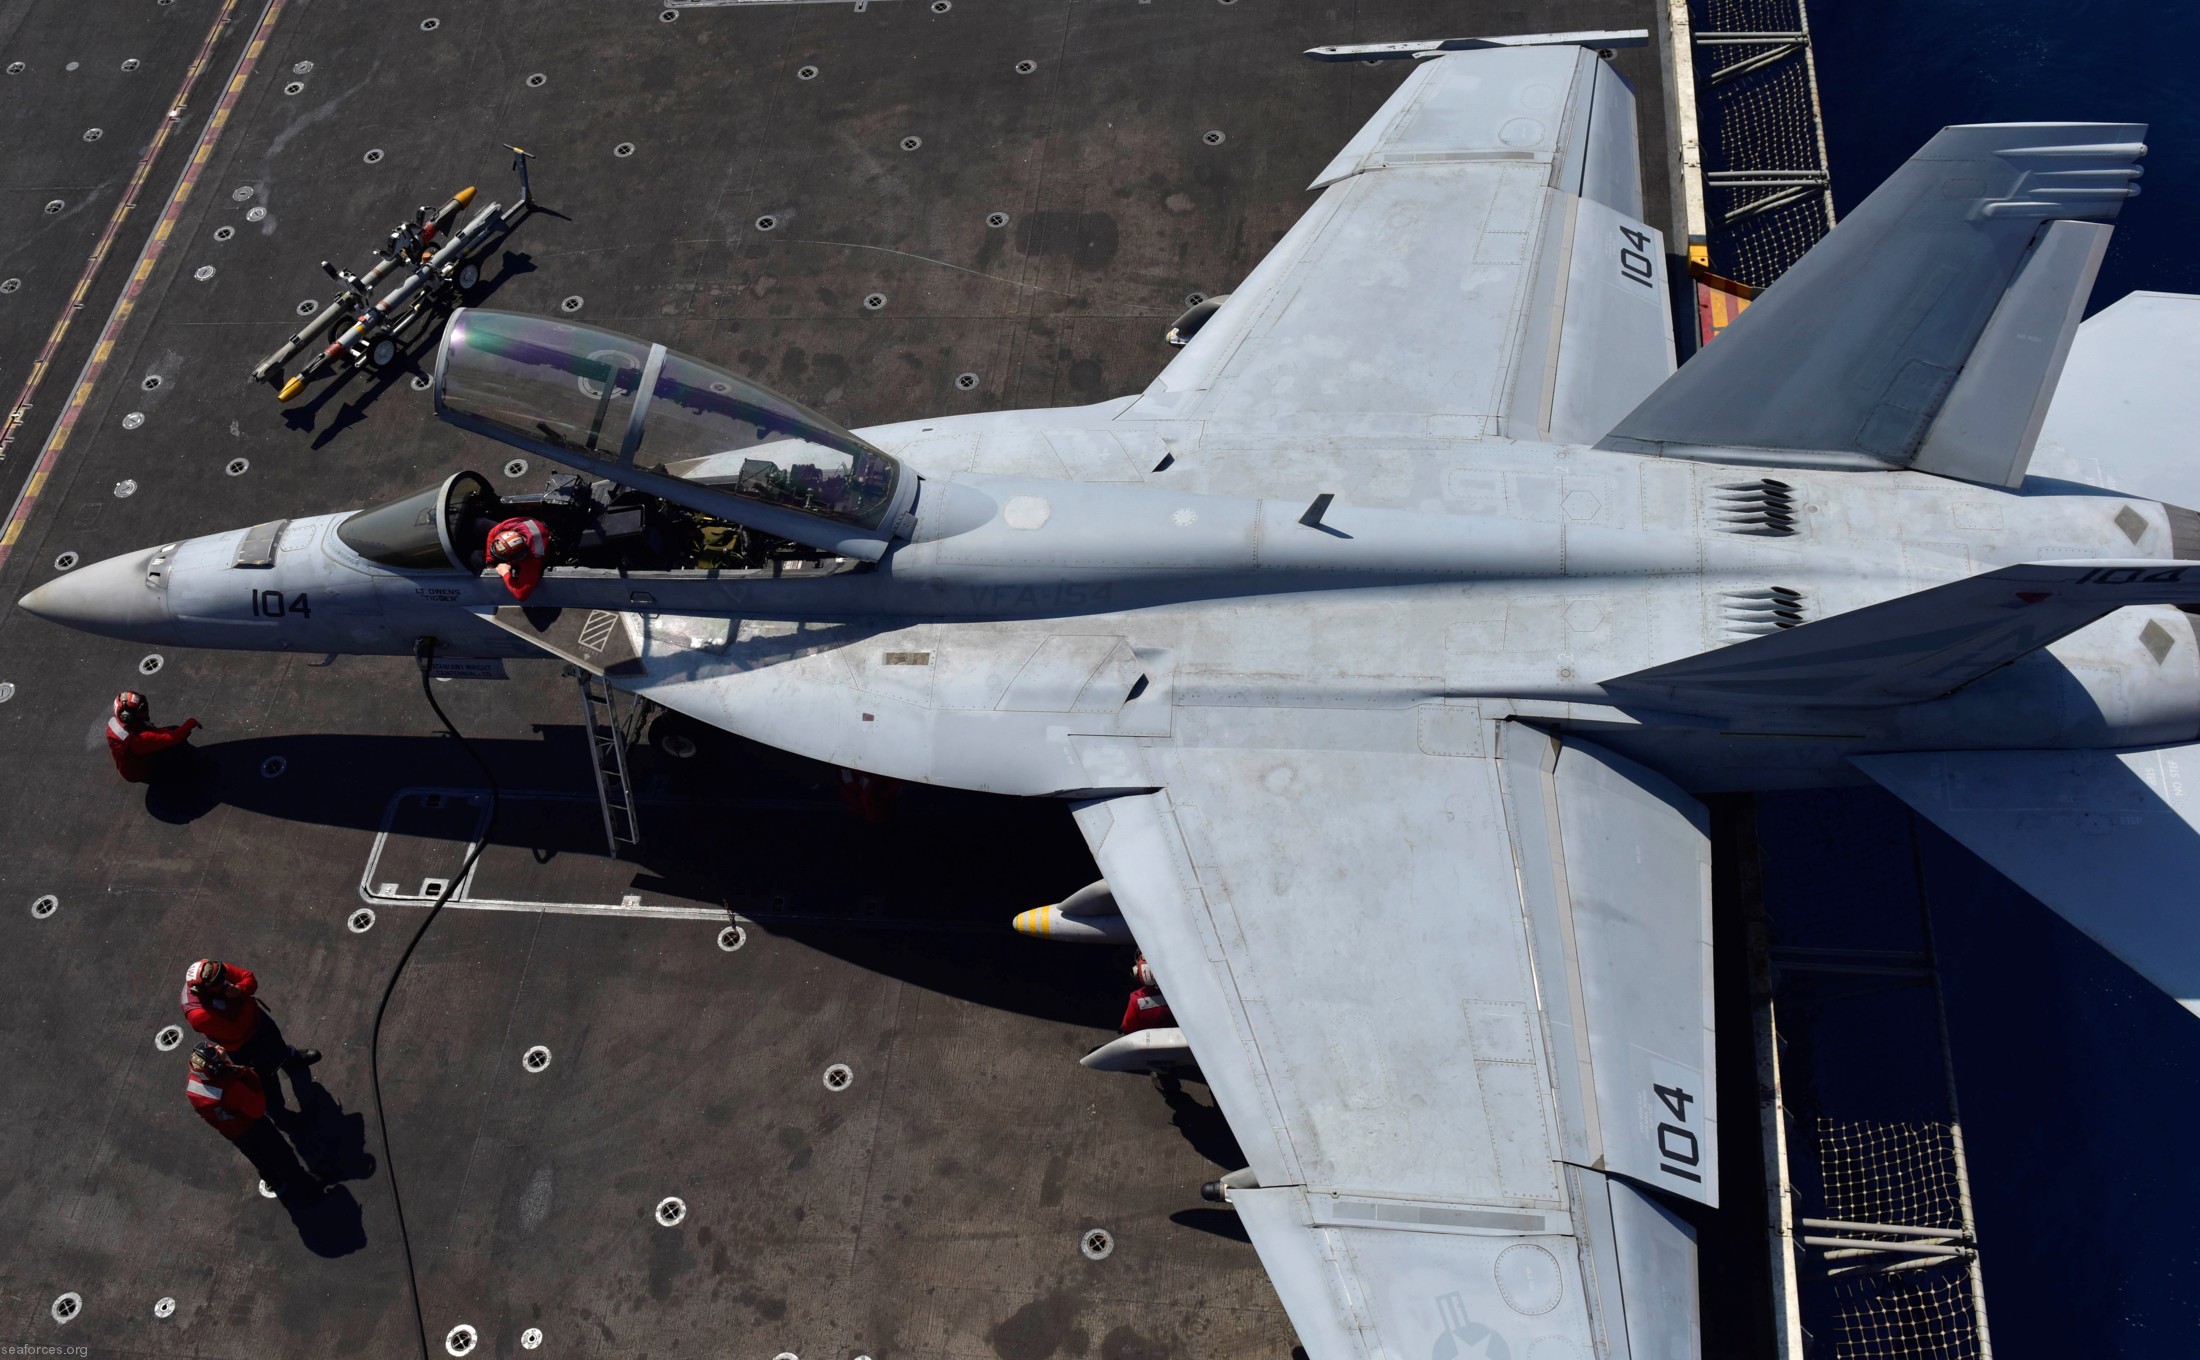 vfa-154 black knights strike fighter squadron navy f/a-18f super hornet carrier air wing cvw-11 uss nimitz cvn-68 06